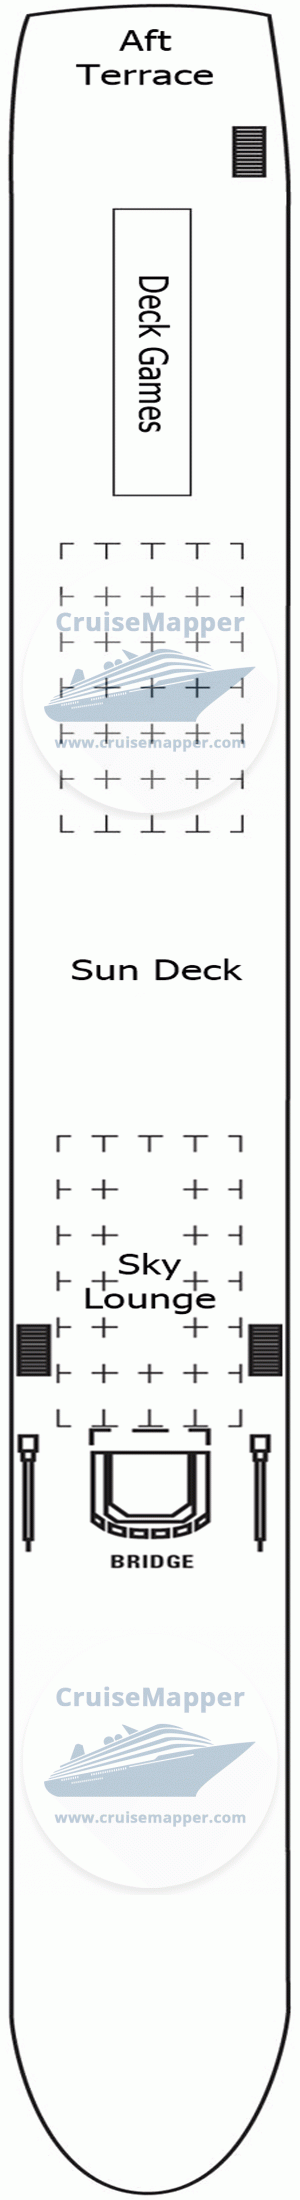 SS La Venezia Deck 04 - Sun